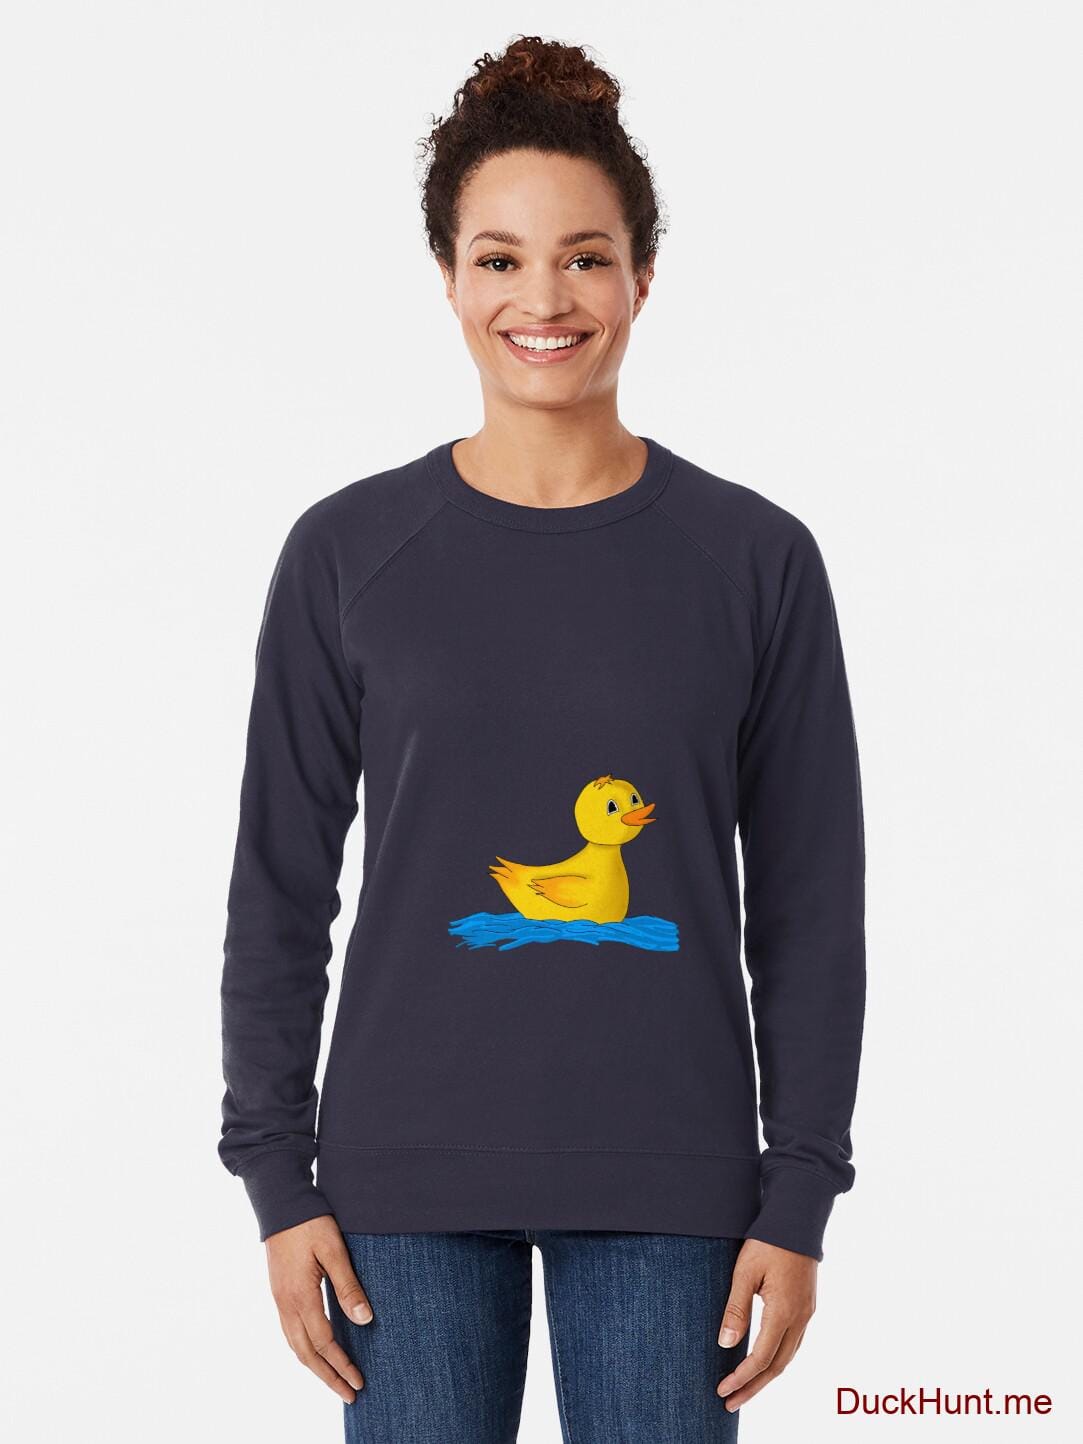 Plastic Duck Navy Lightweight Sweatshirt alternative image 1